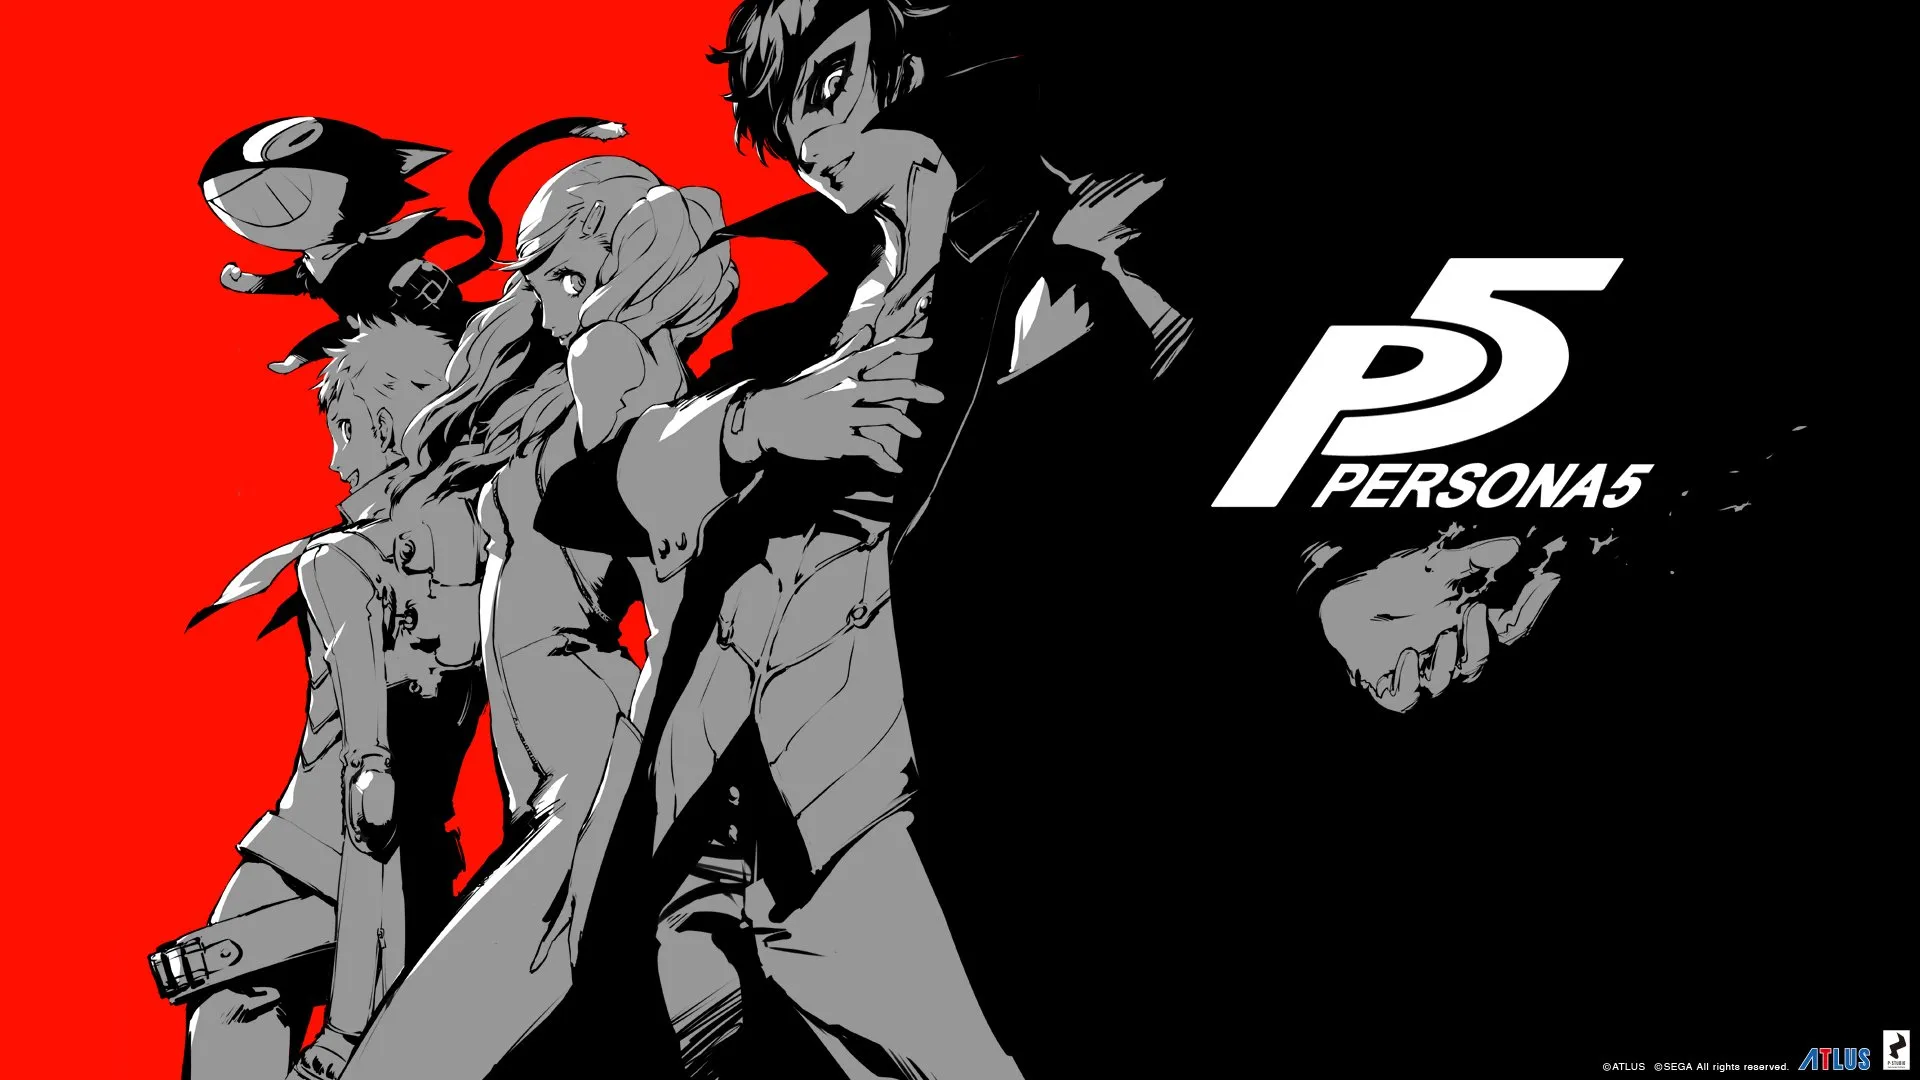 Persona 5 Royal Gameplay Trailer (Japanese) - Ann Takamaki 